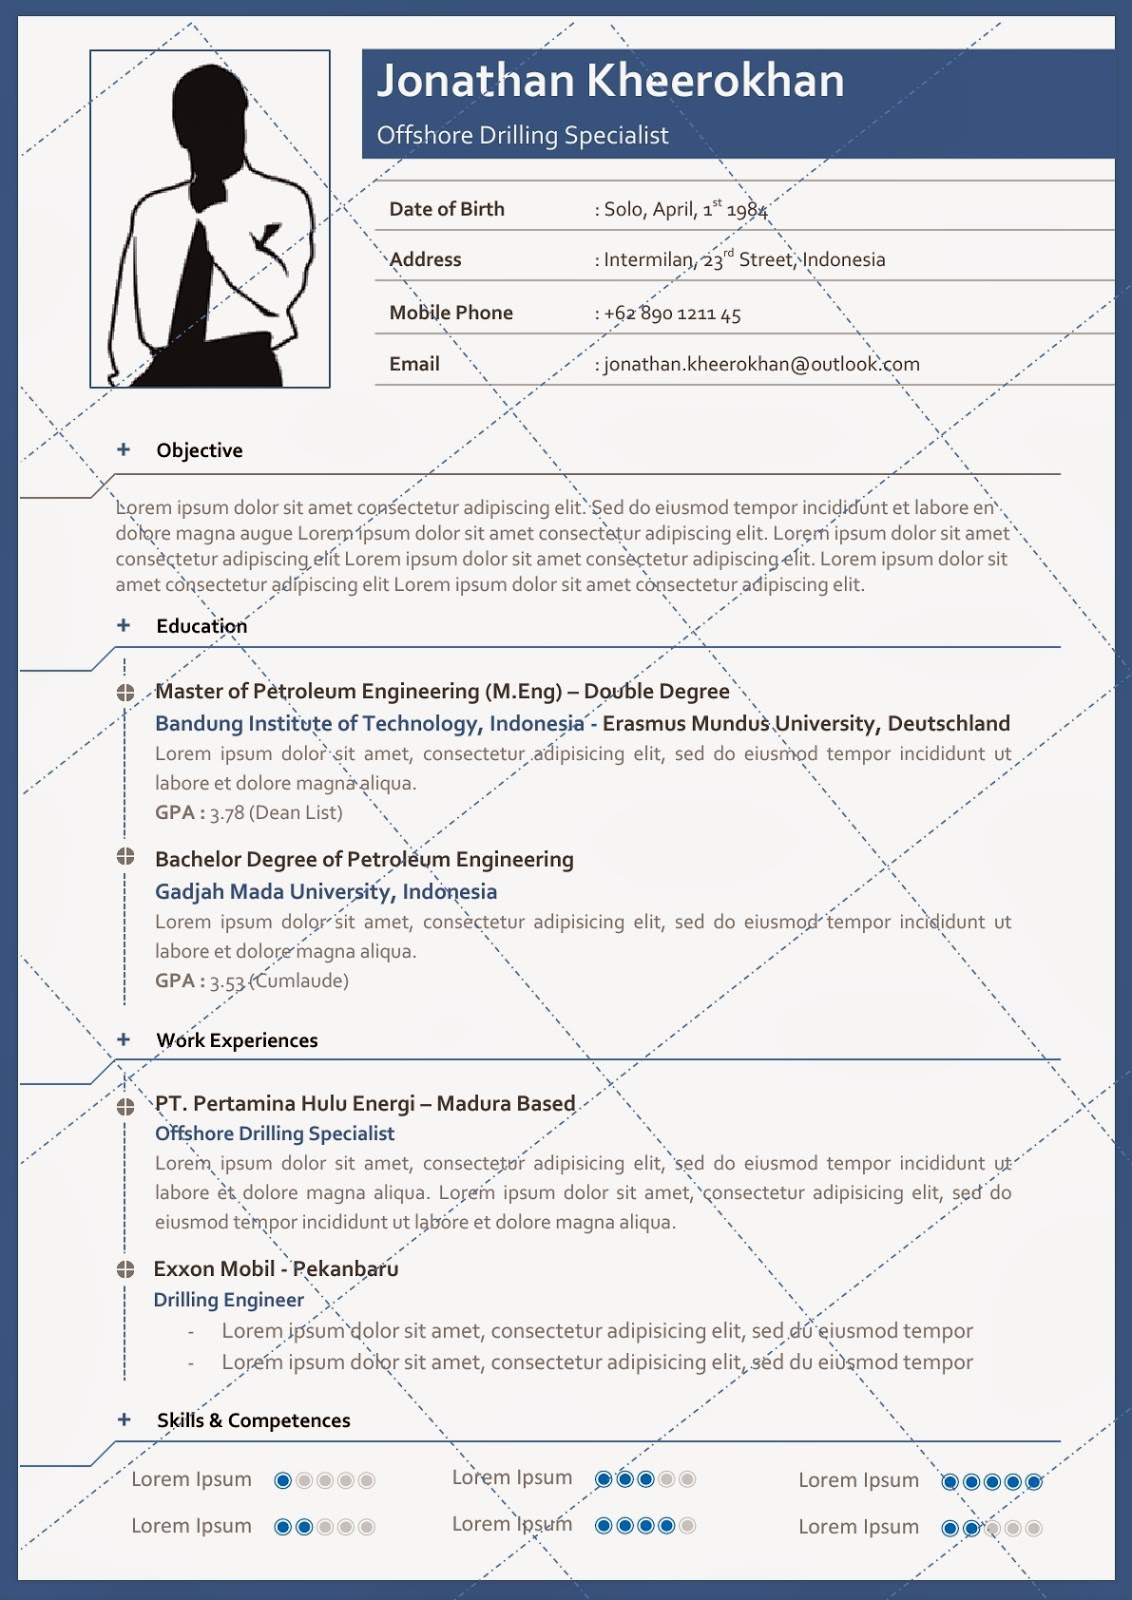 Desain CV Kreatif: Khania - Contoh CV / Resume Template